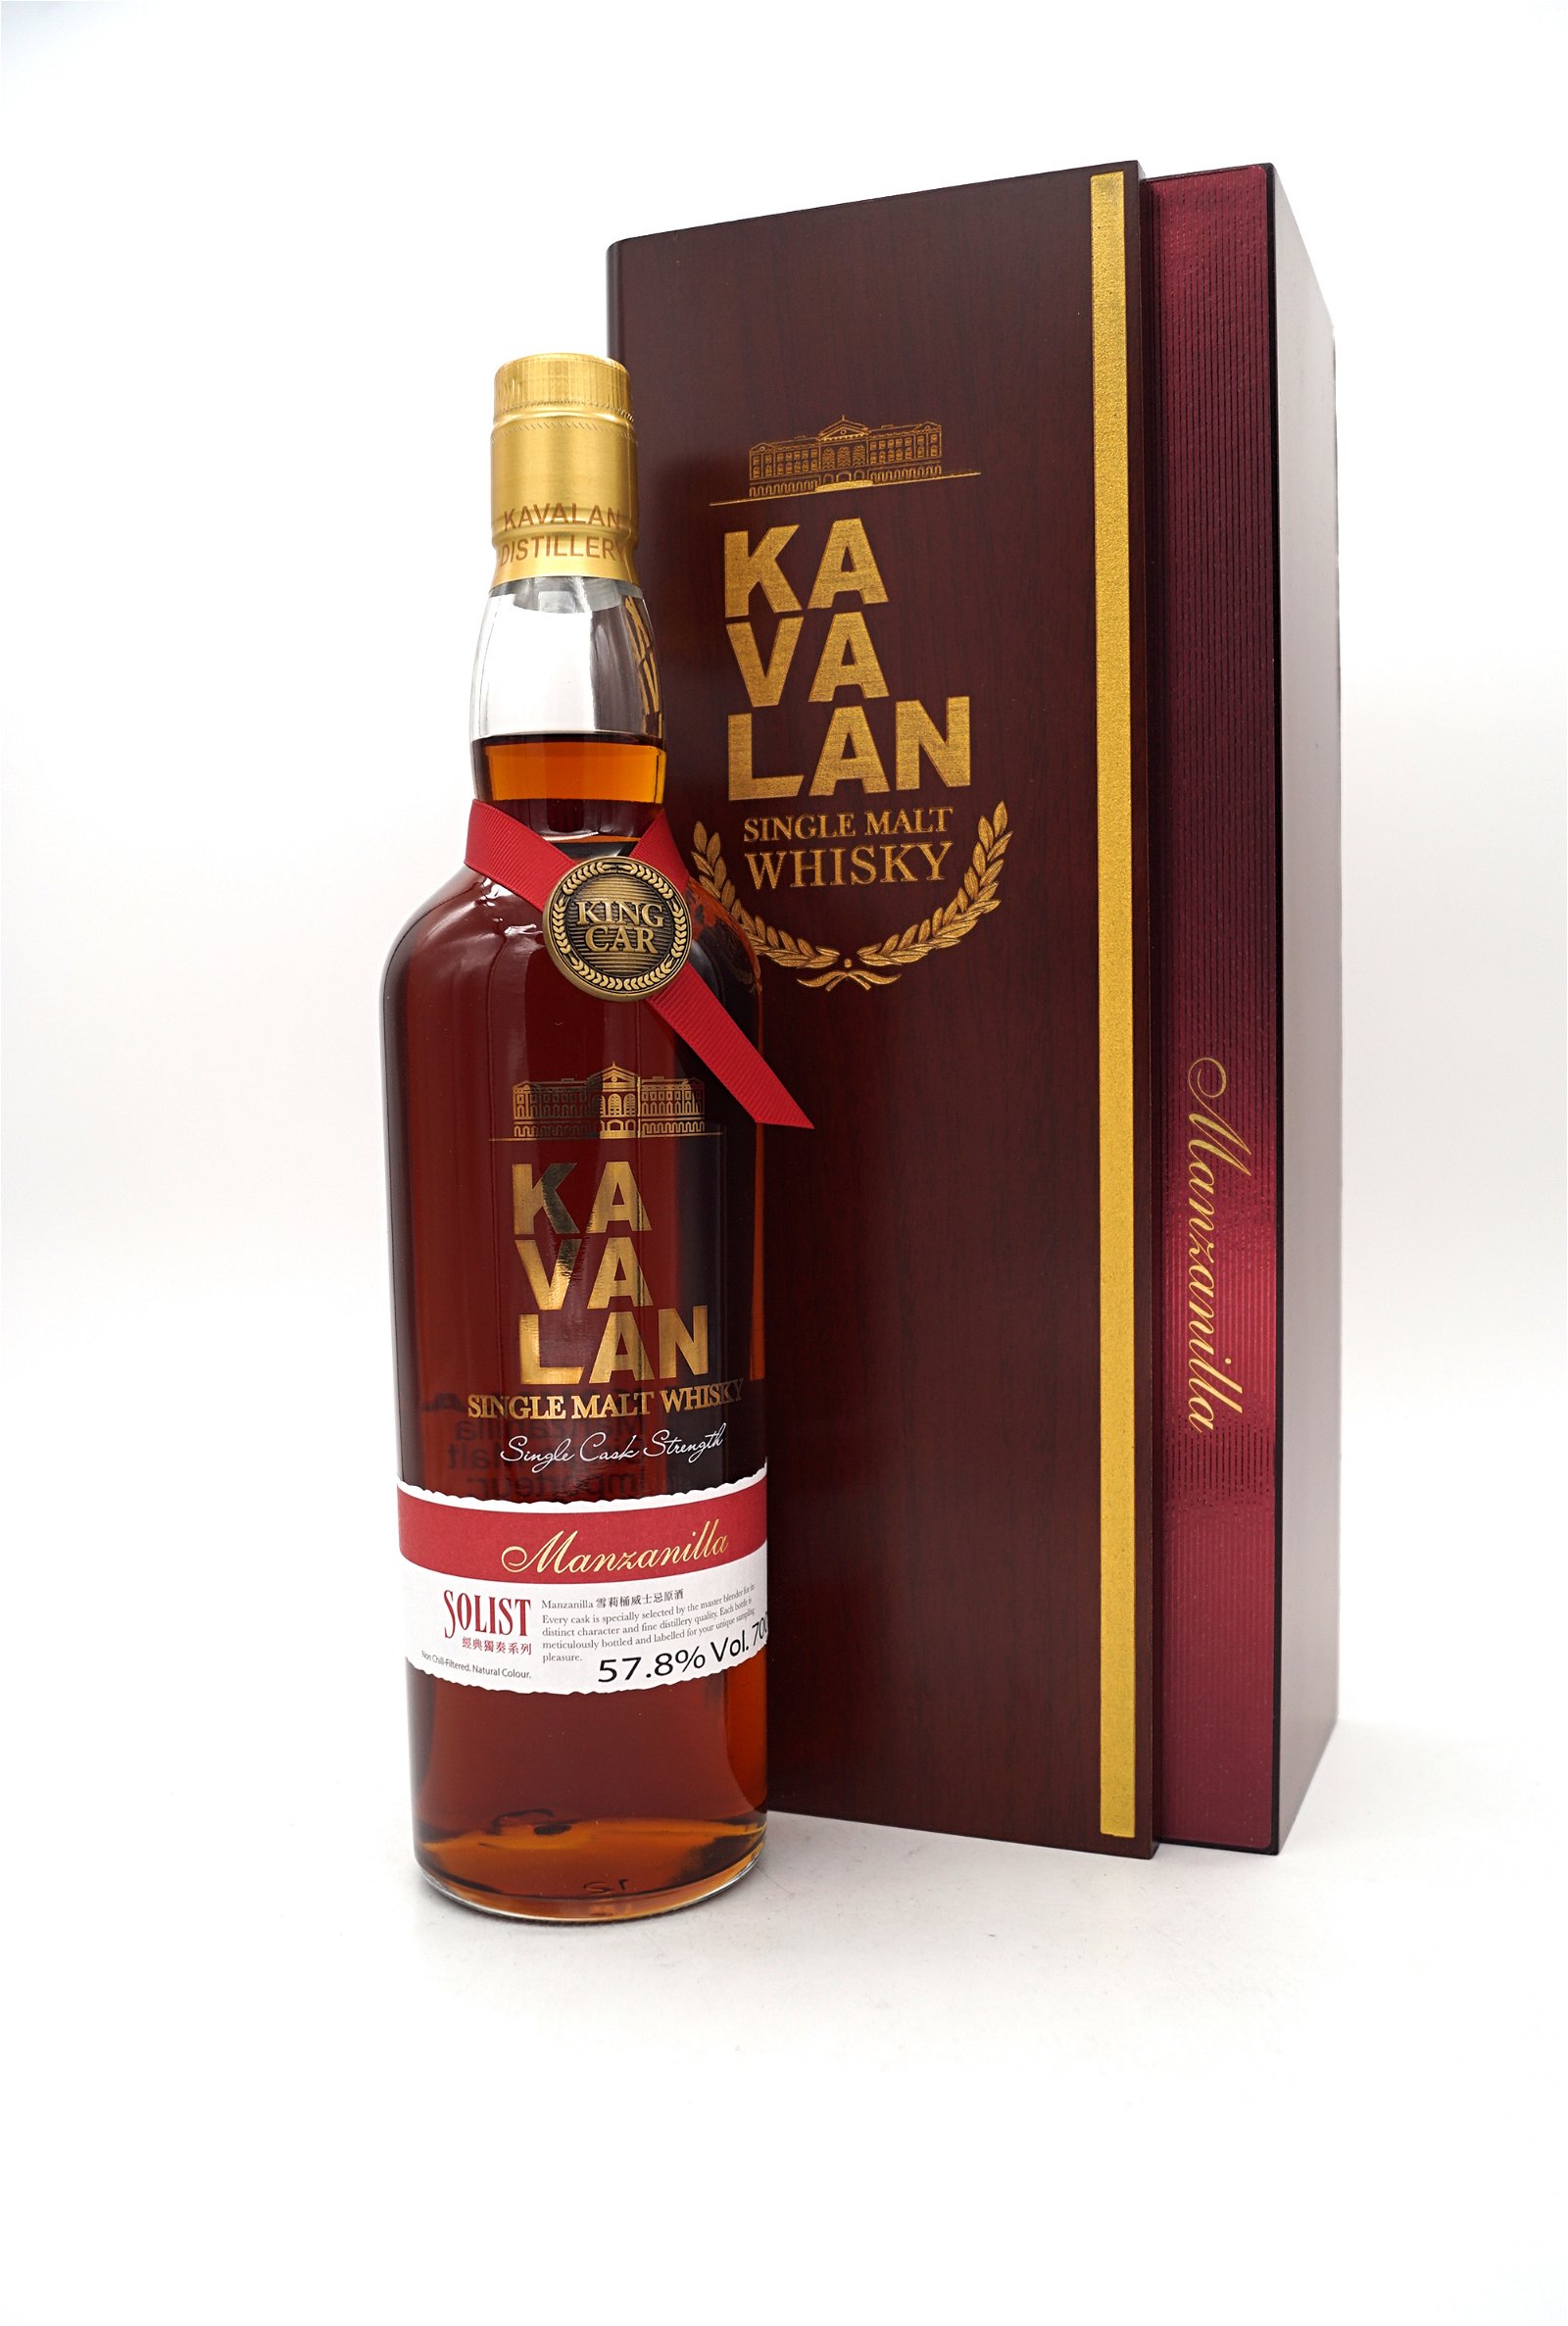 Kavalan Solist Manzanilla Cask Strength Taiwan Single Malt Whisky